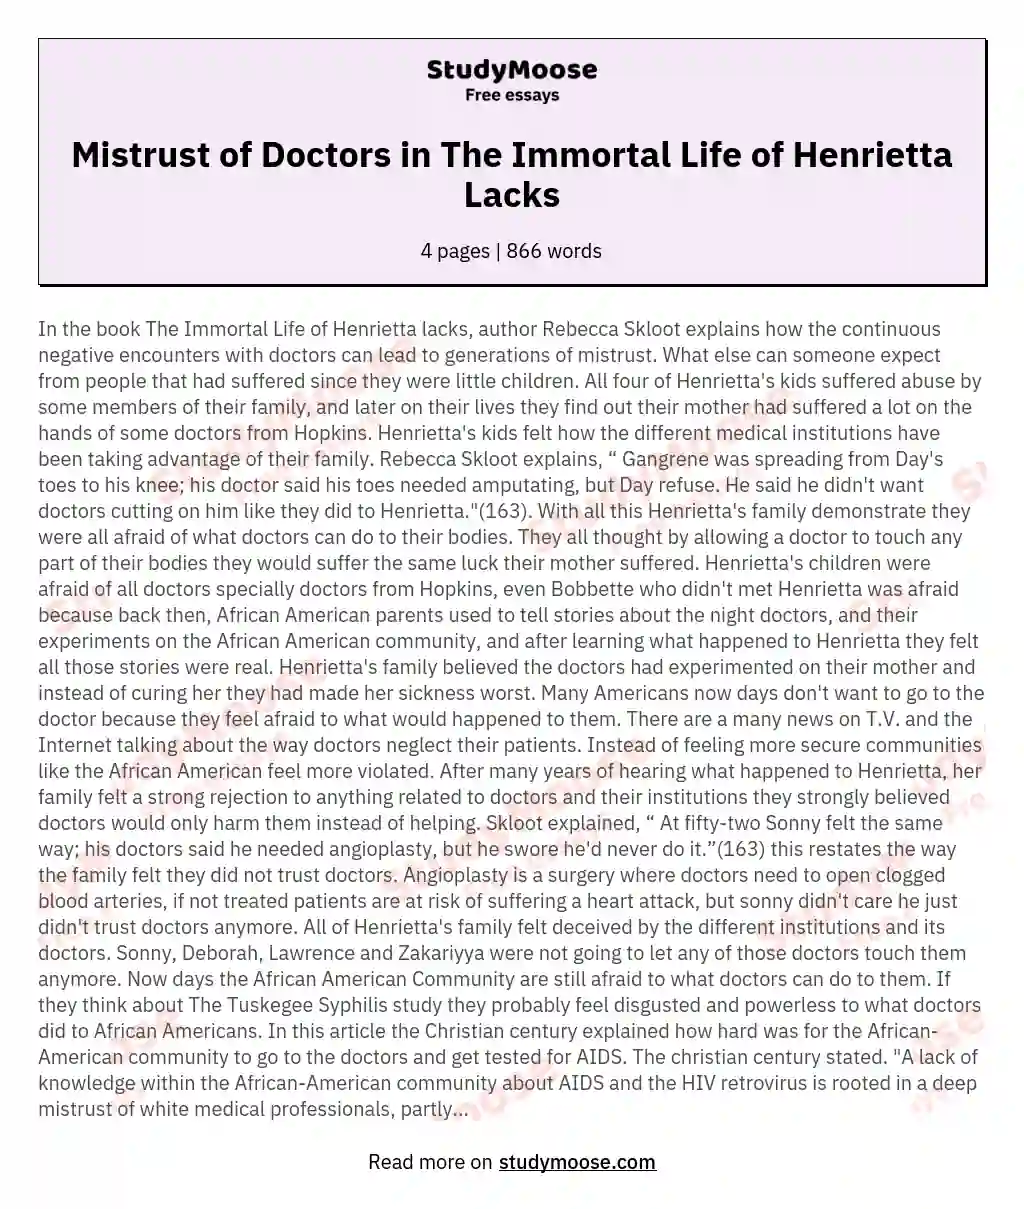 Mistrust of Doctors in The Immortal Life of Henrietta Lacks essay